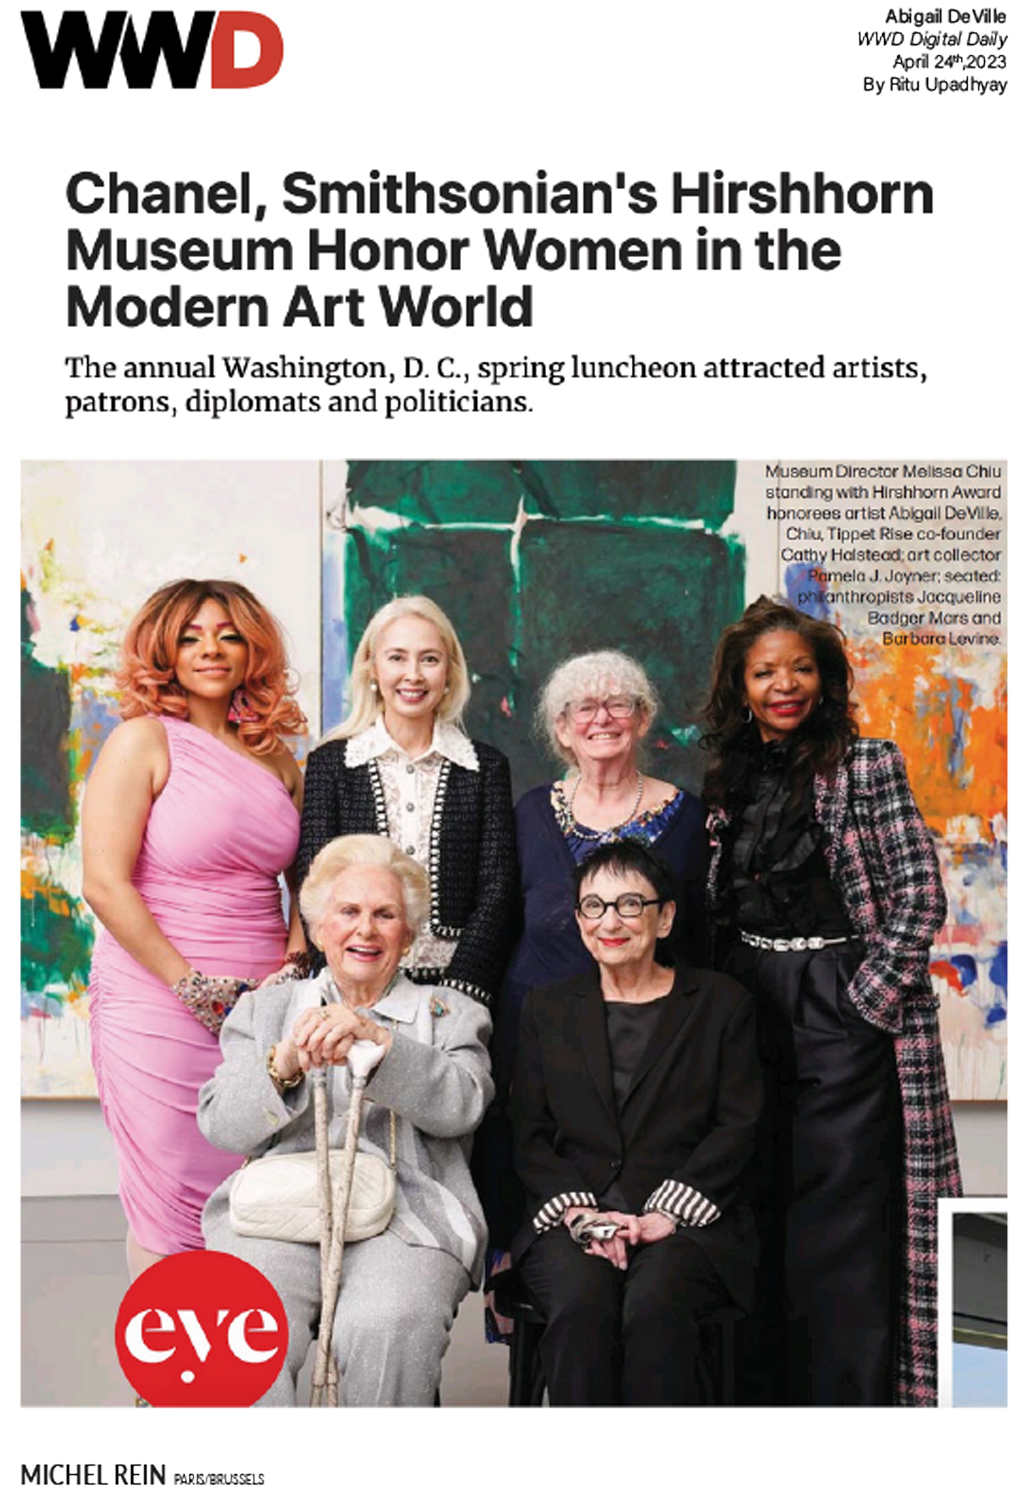 Chanel, Smithsonian's Hirshhorn Museum Honor Women in the Modern Art World - WWD Digital Daily